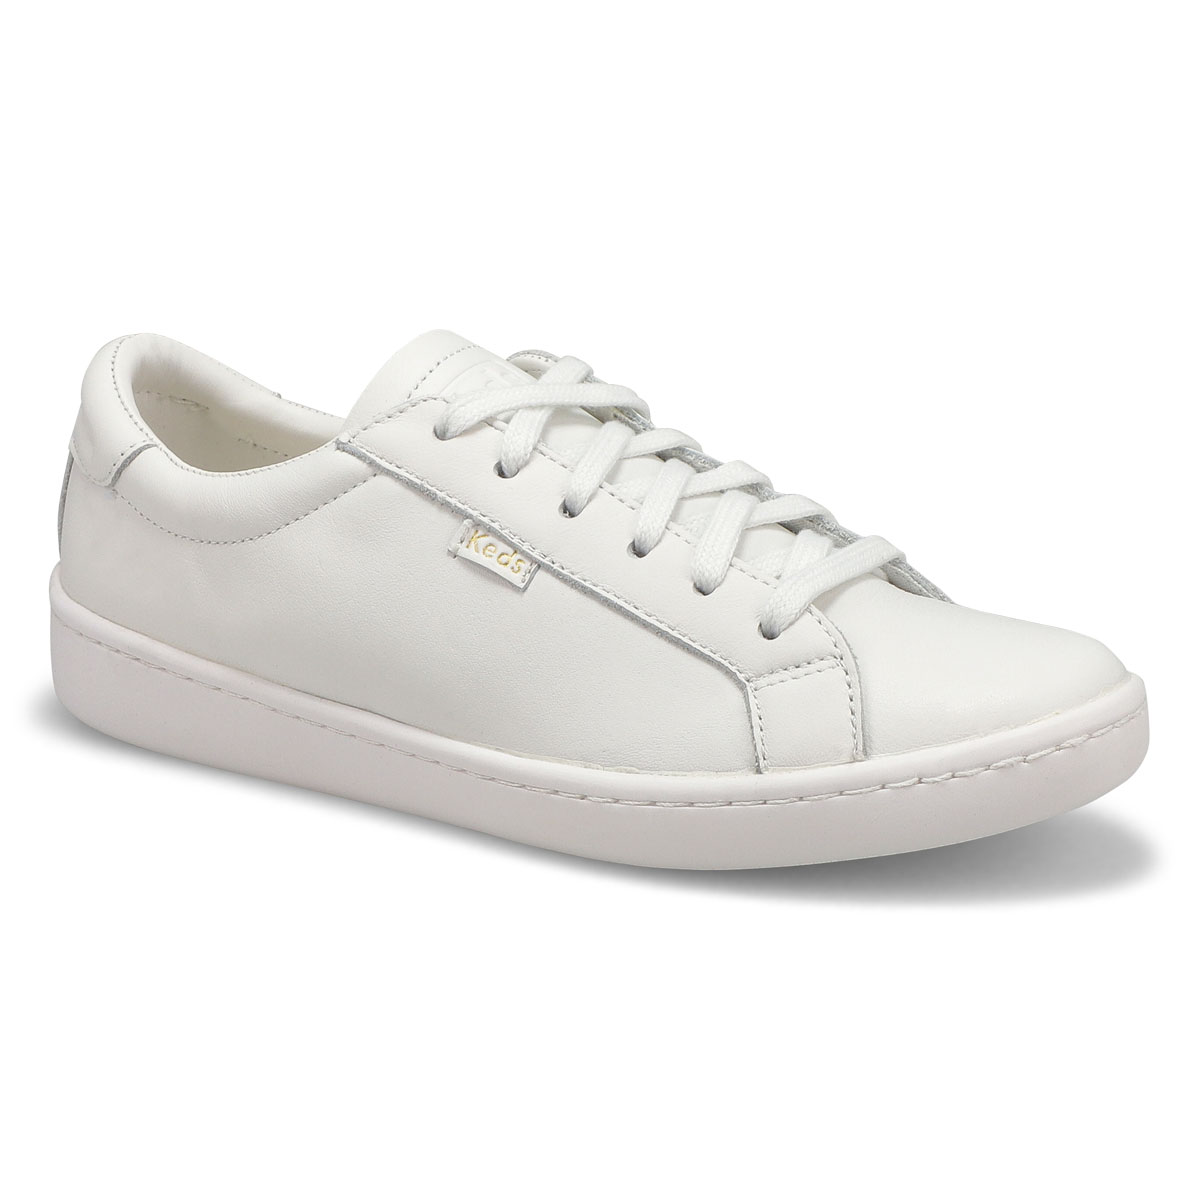 Women's Ace Sneaker - White/White